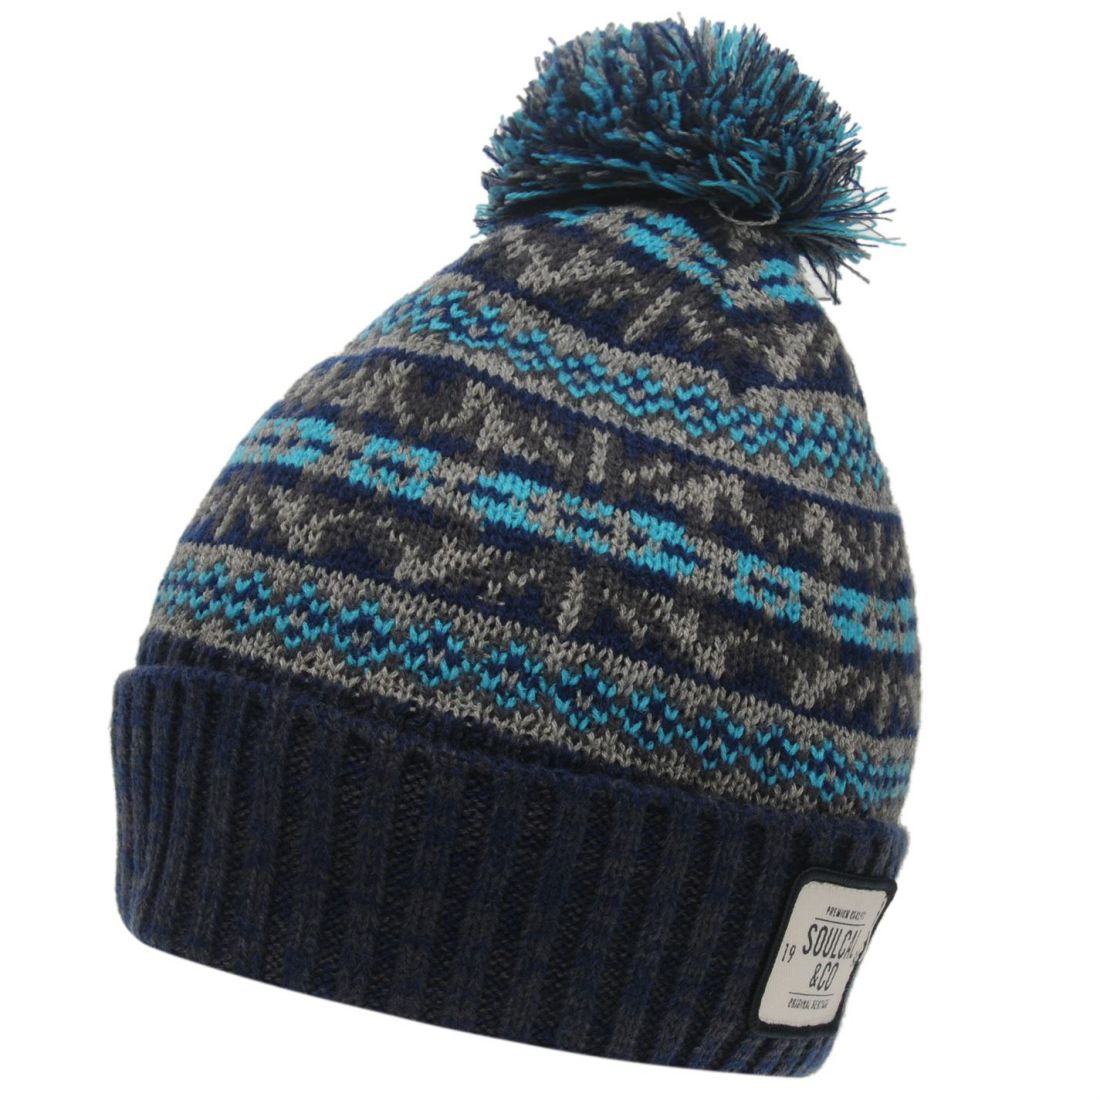 Knitting Pattern Bobble Hat Details About Soulcal Mens Dogoda Bobble Hat Pattern Winter